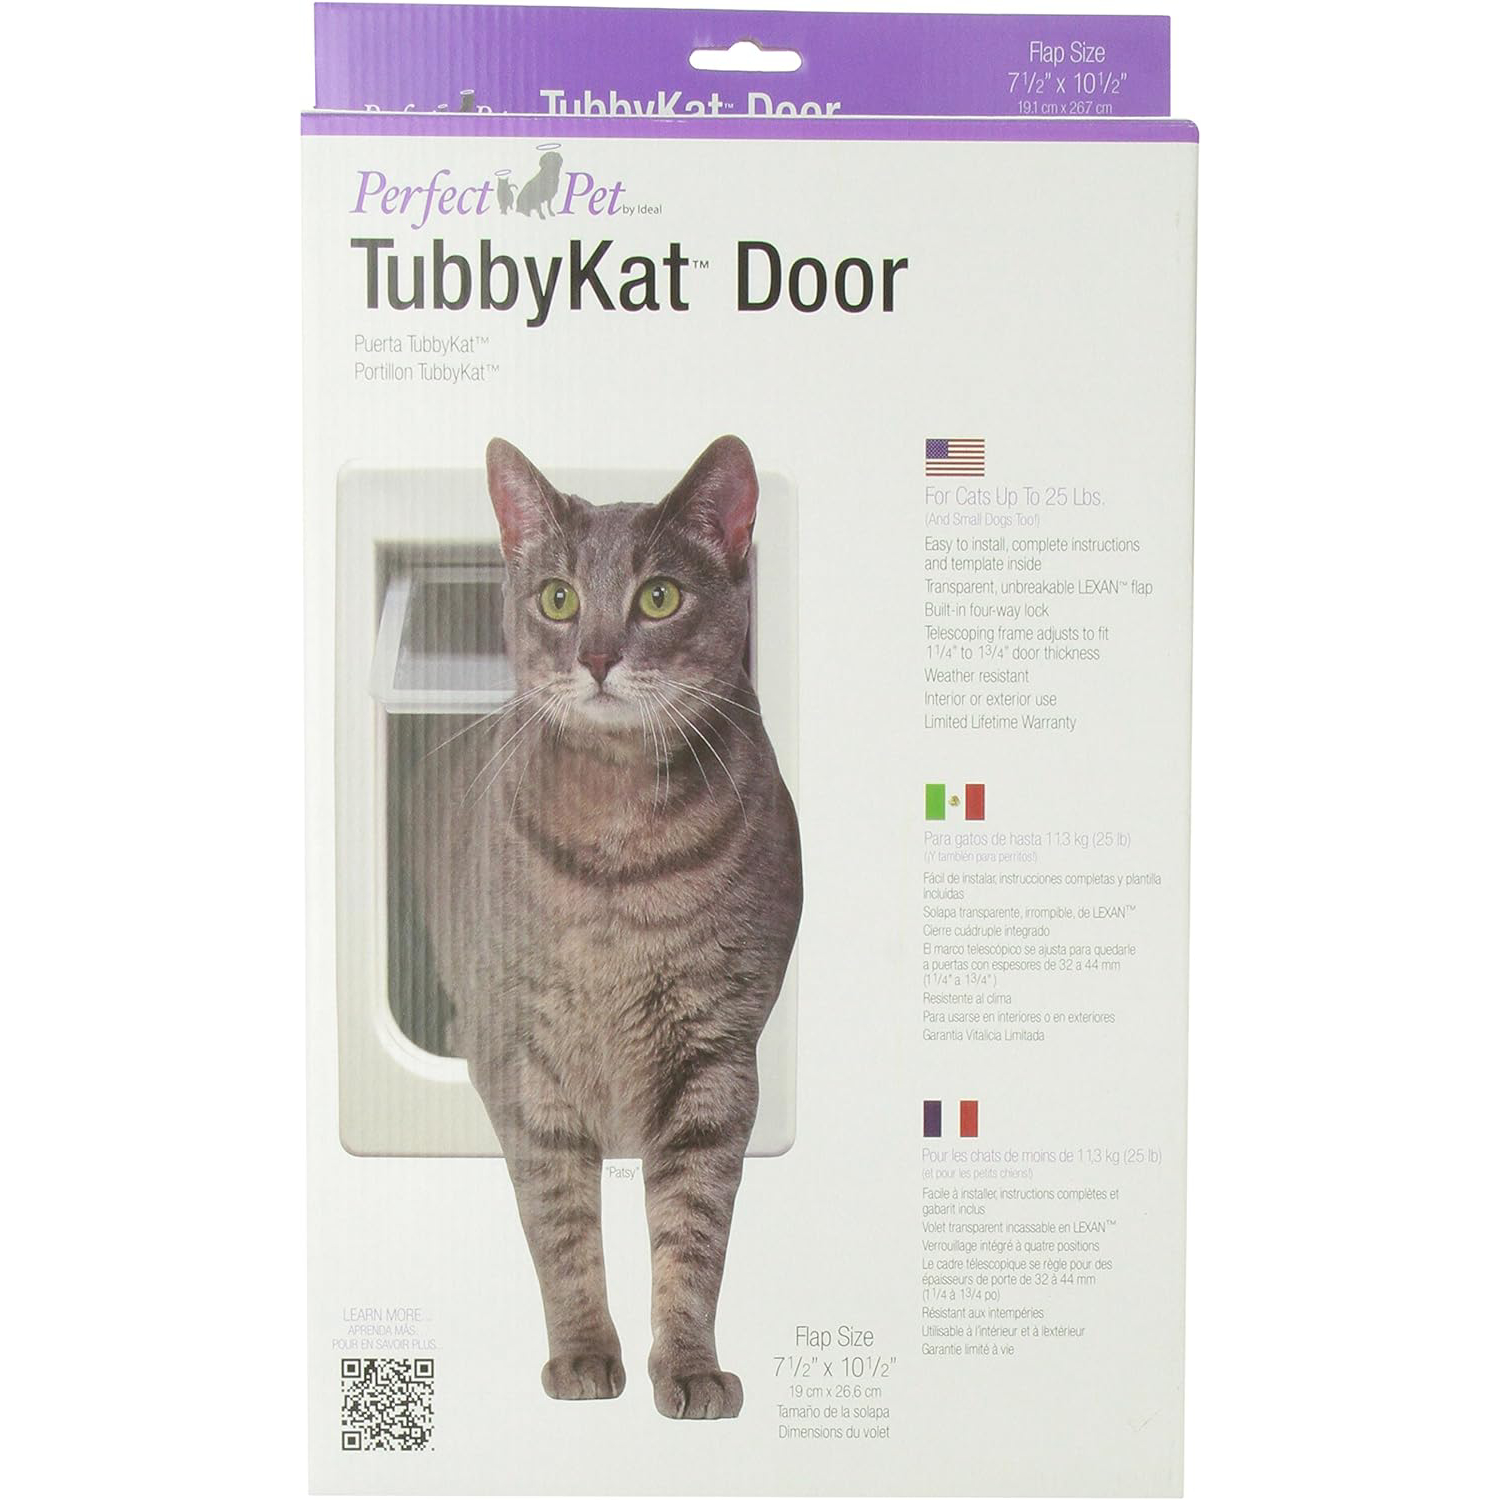 Perfect Pet Tubby Kat Cat Door with 4 Way Lock And LEXAN Flap New